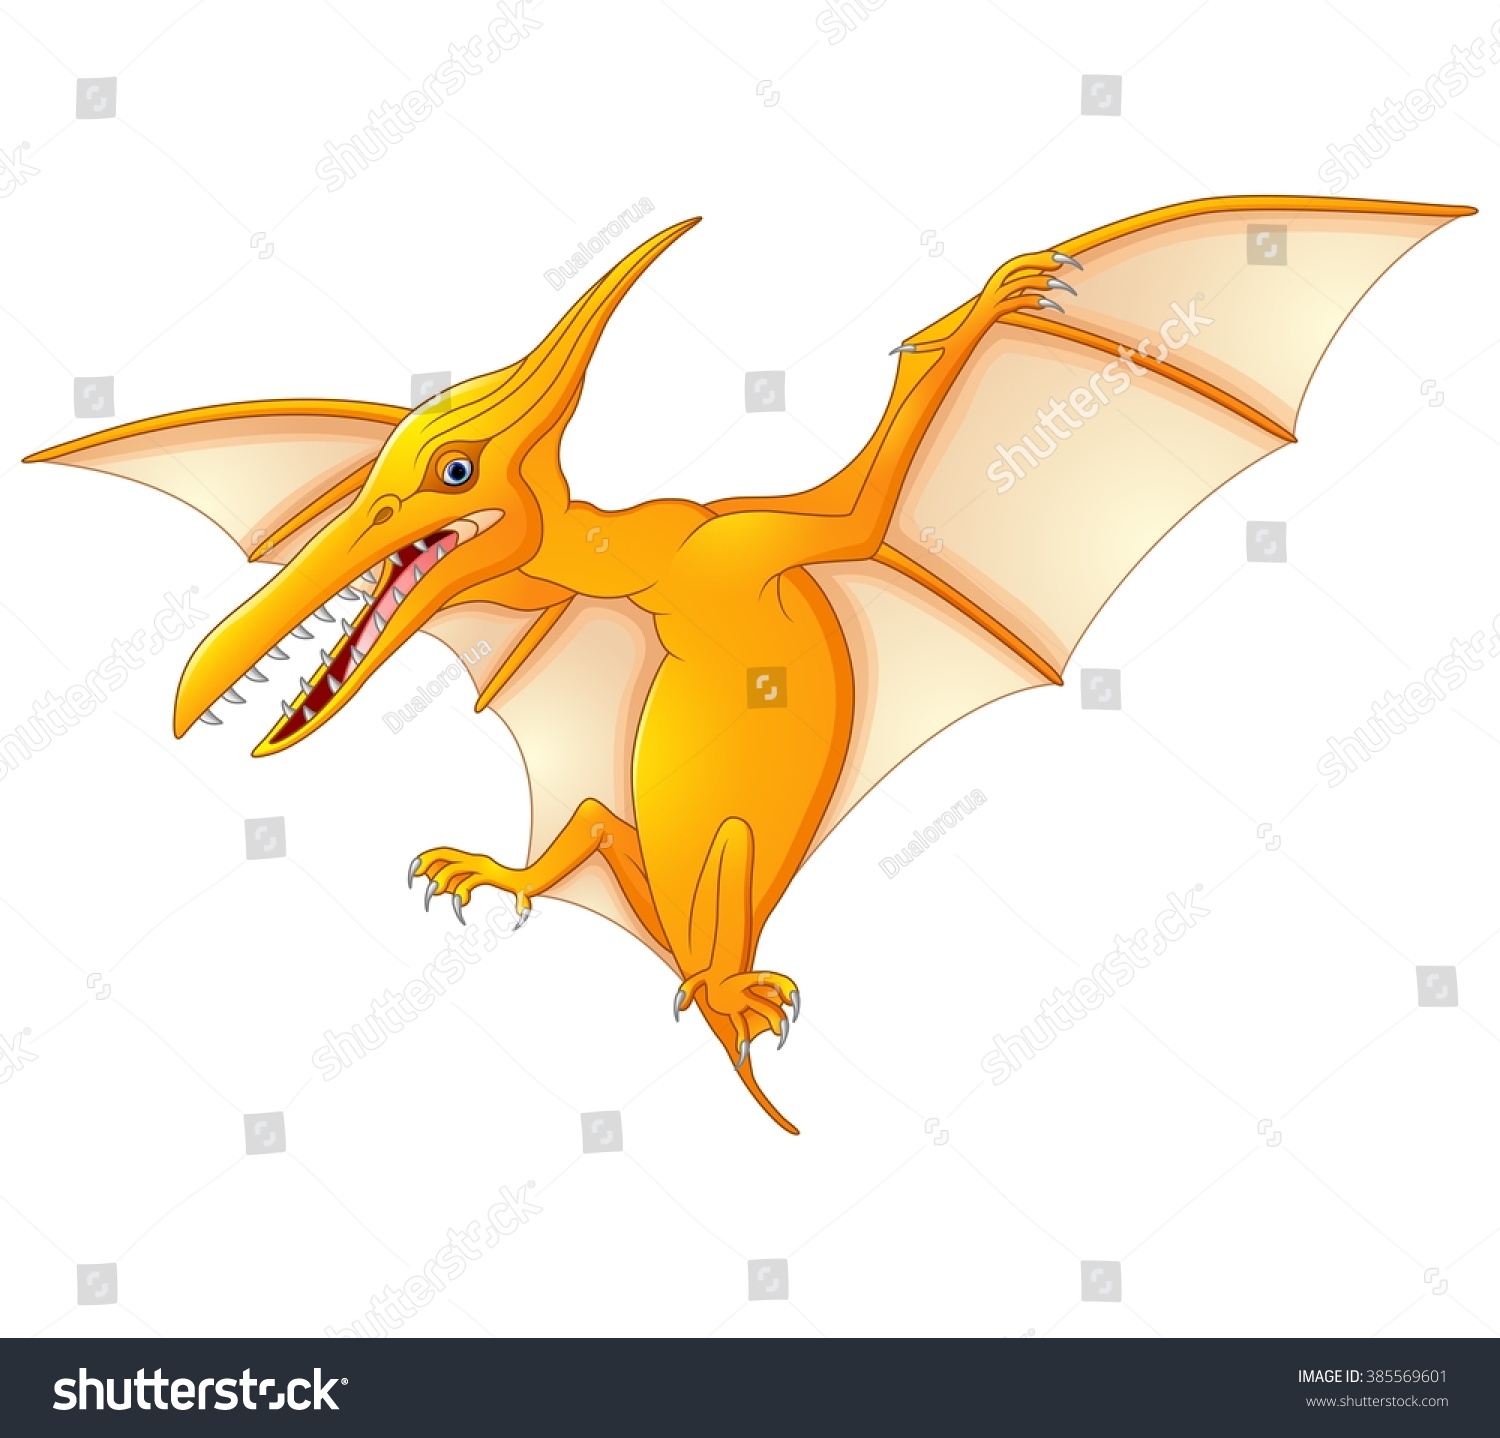 Cute Pterodactyl Cartoon Stock Vector 385569601 : Shutterstock